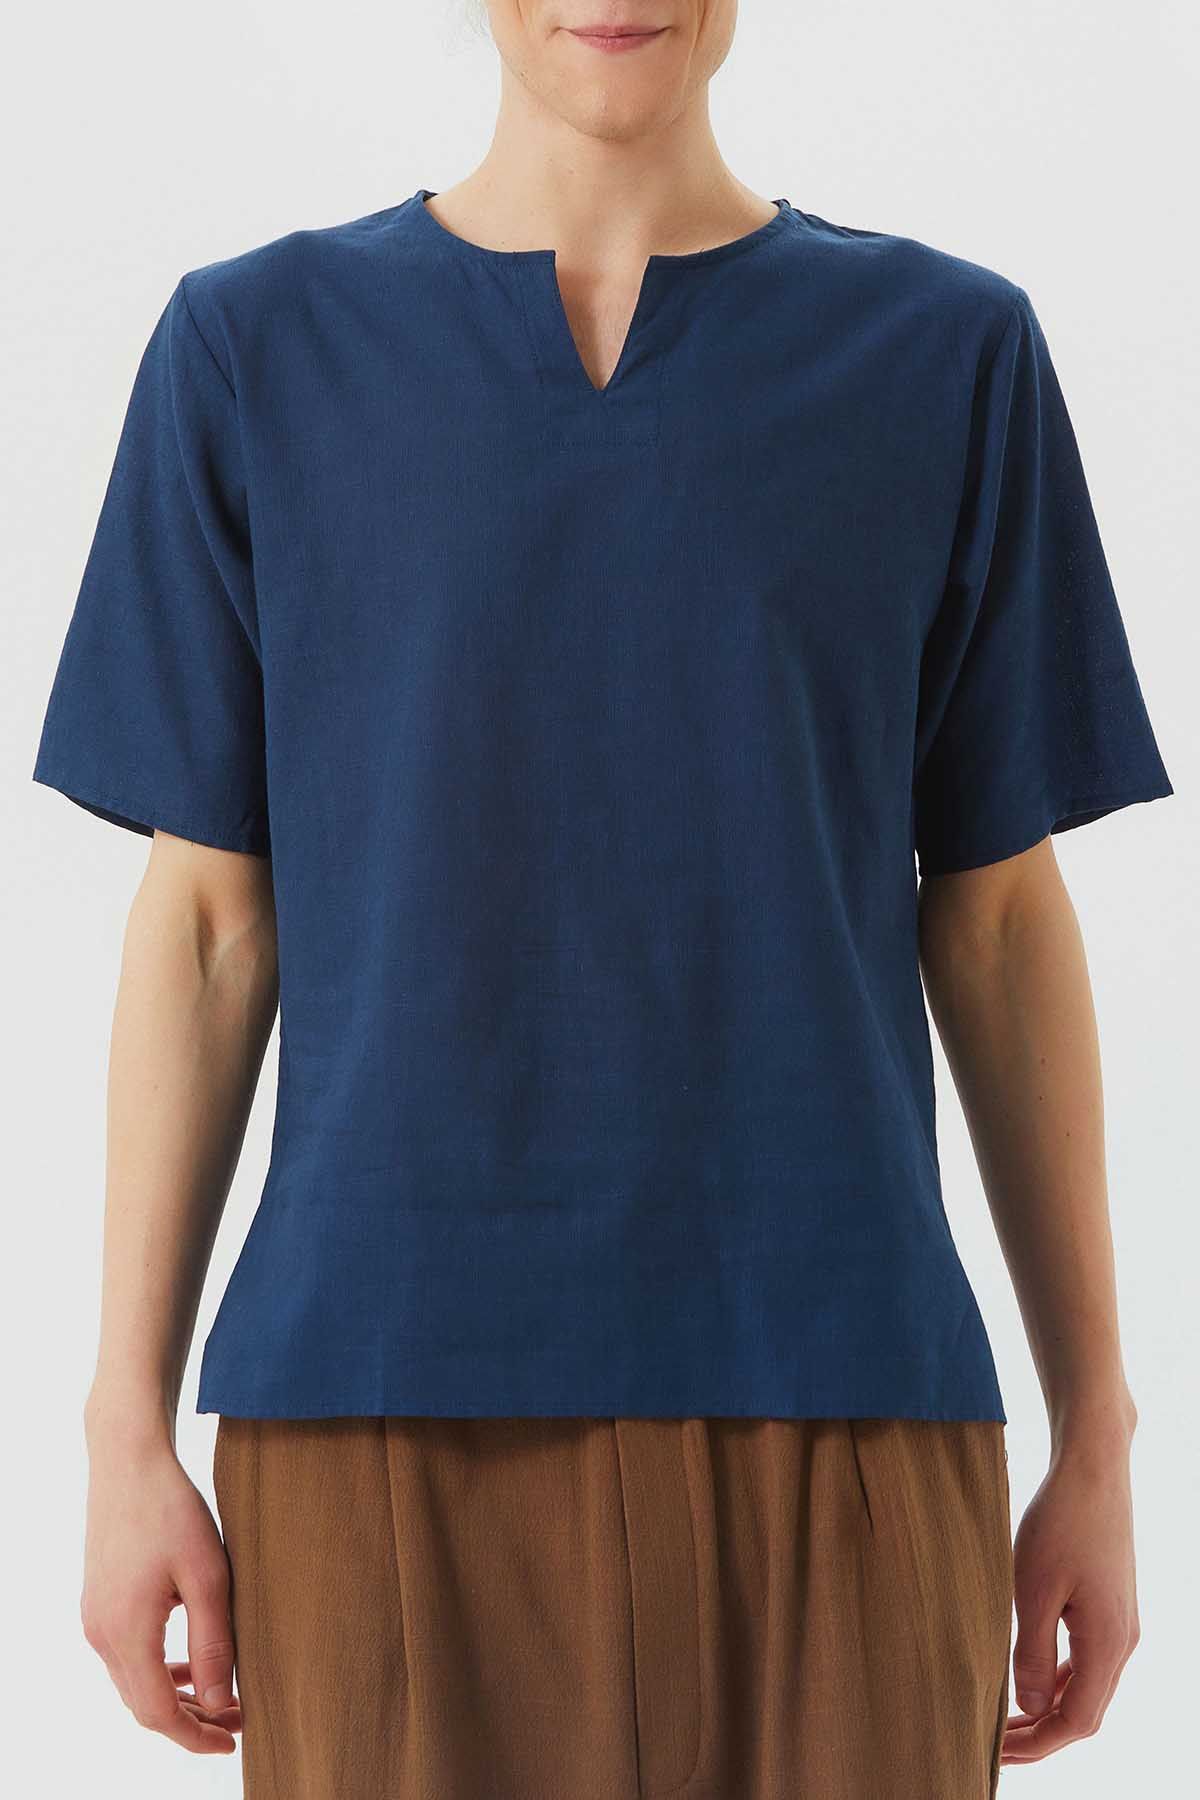 Men's Short Sleeve Boho Hippie Shirt Dark Blue